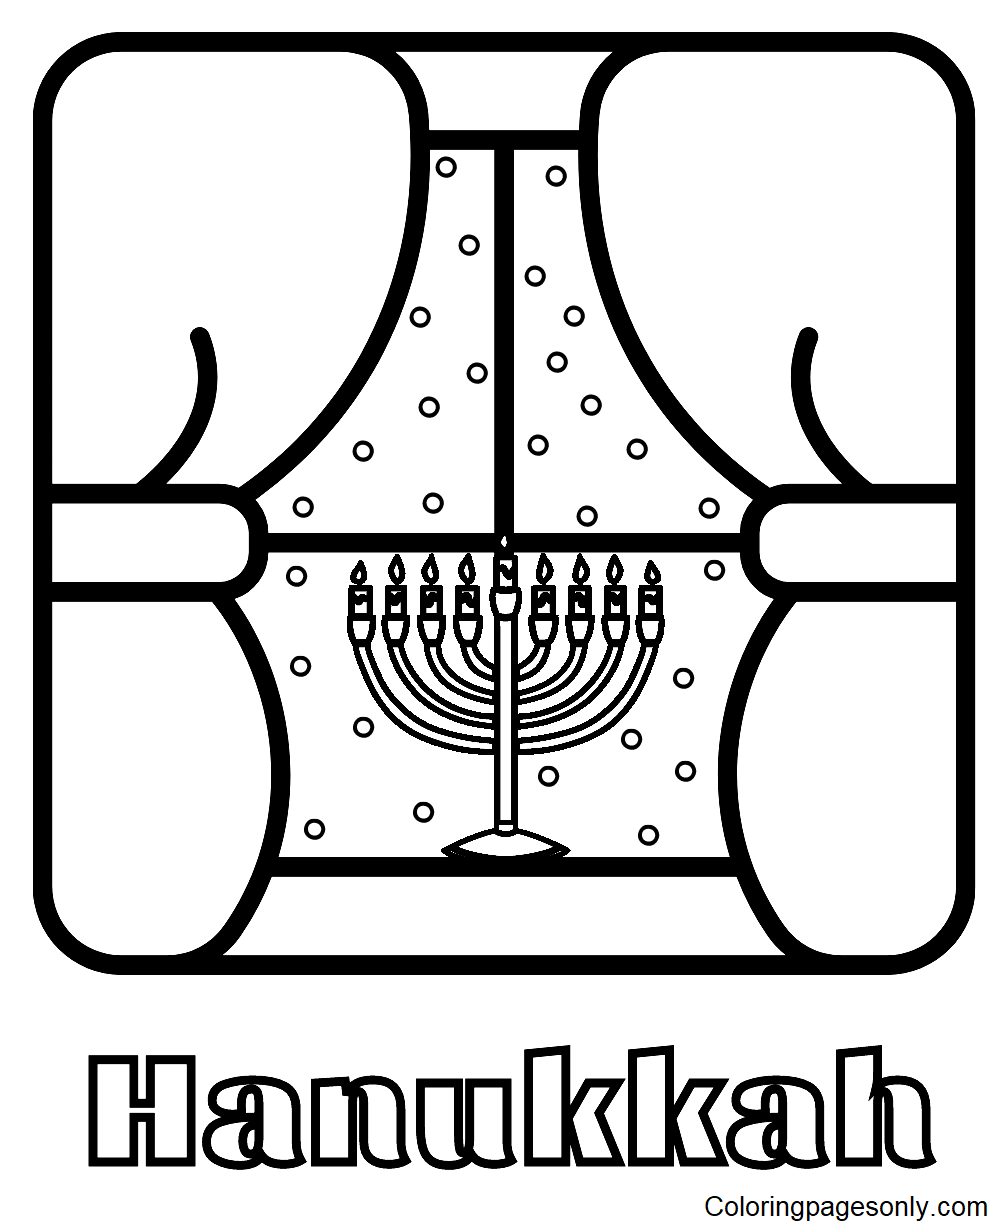 Hanukkah Free Coloring Pages